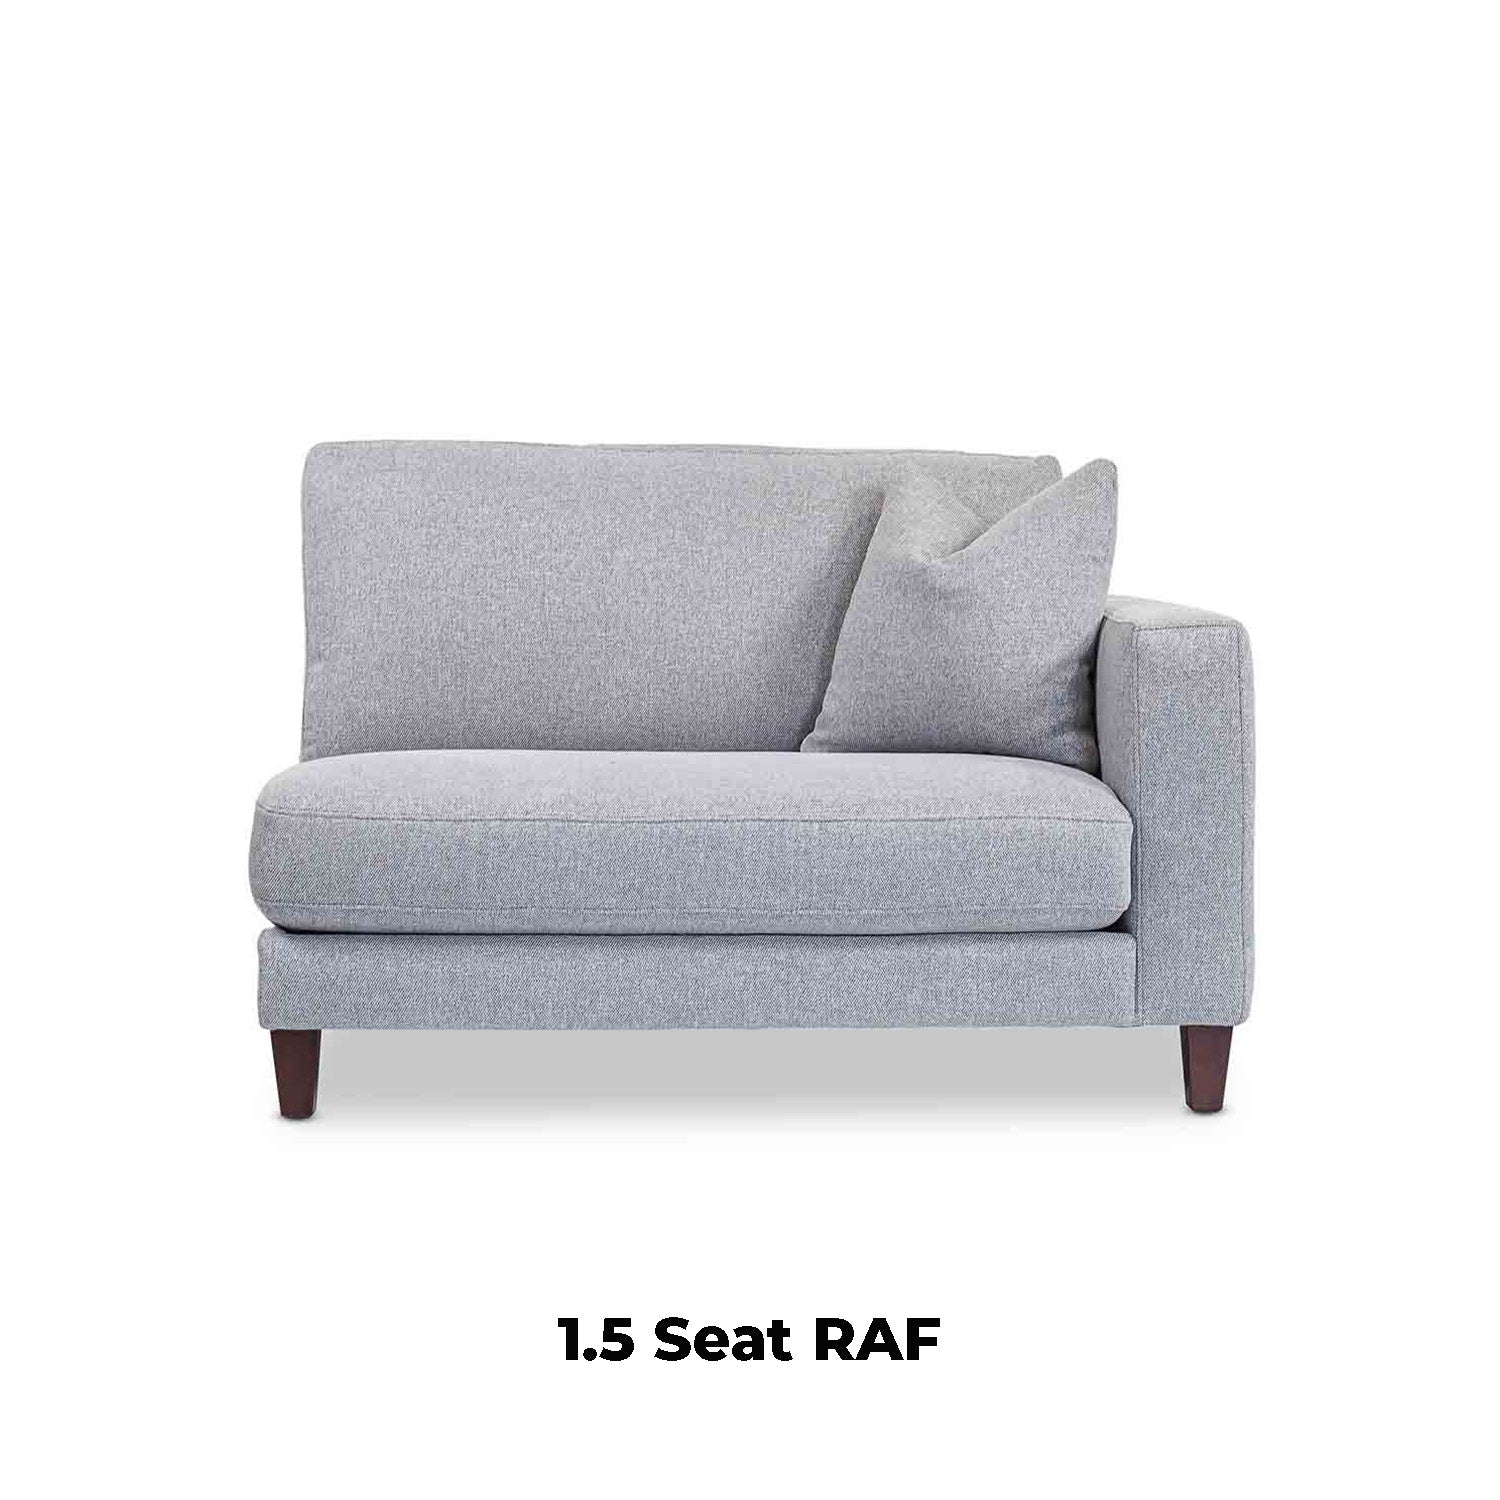 Chelsea Fabric 1.5 Seat RAF